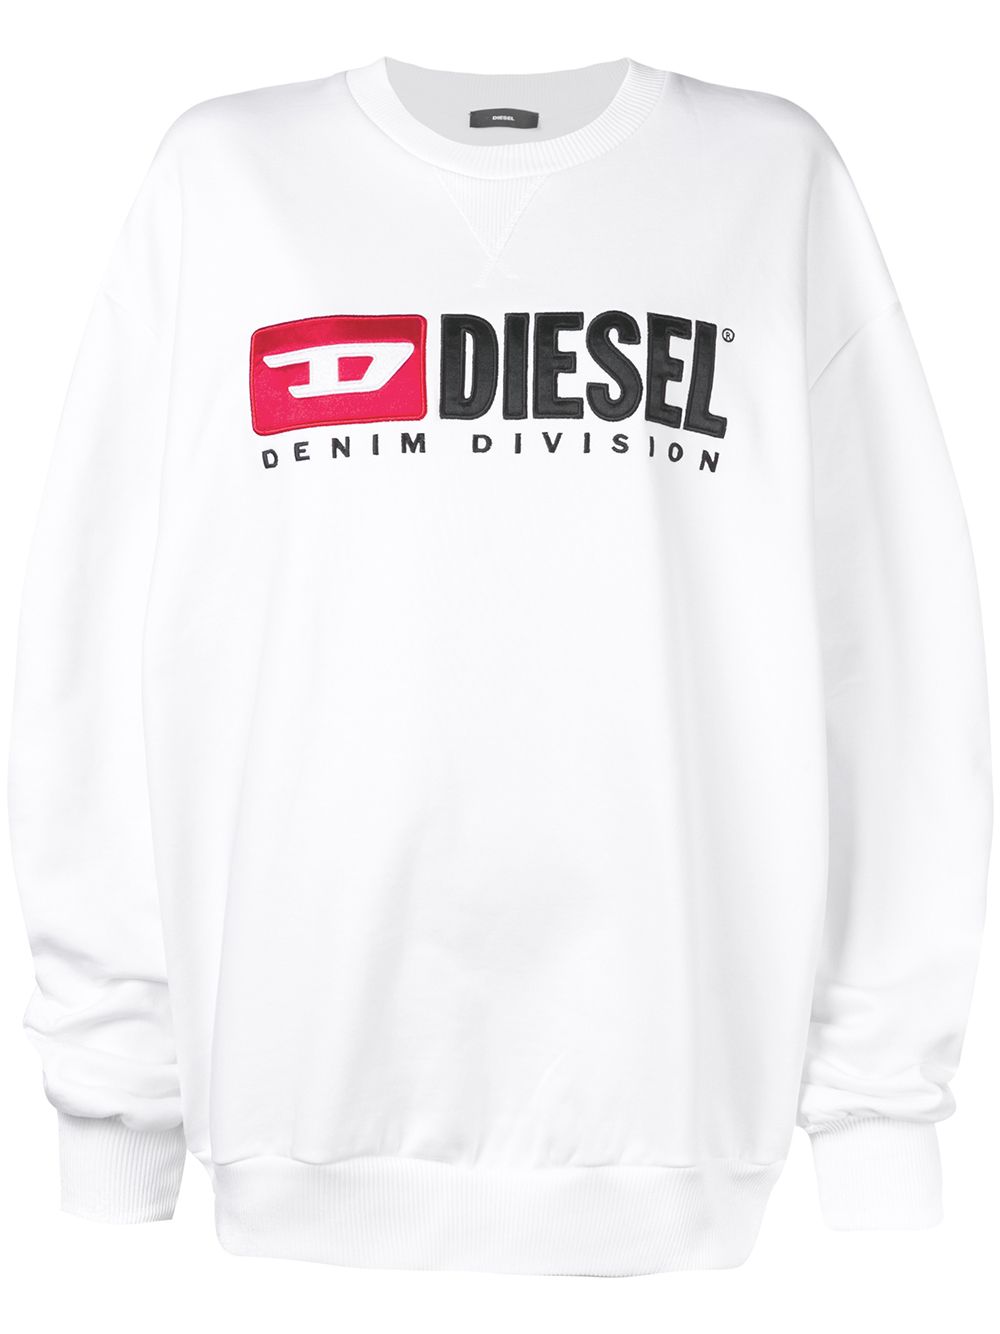 фото Diesel толстовка с вышитым логотипом